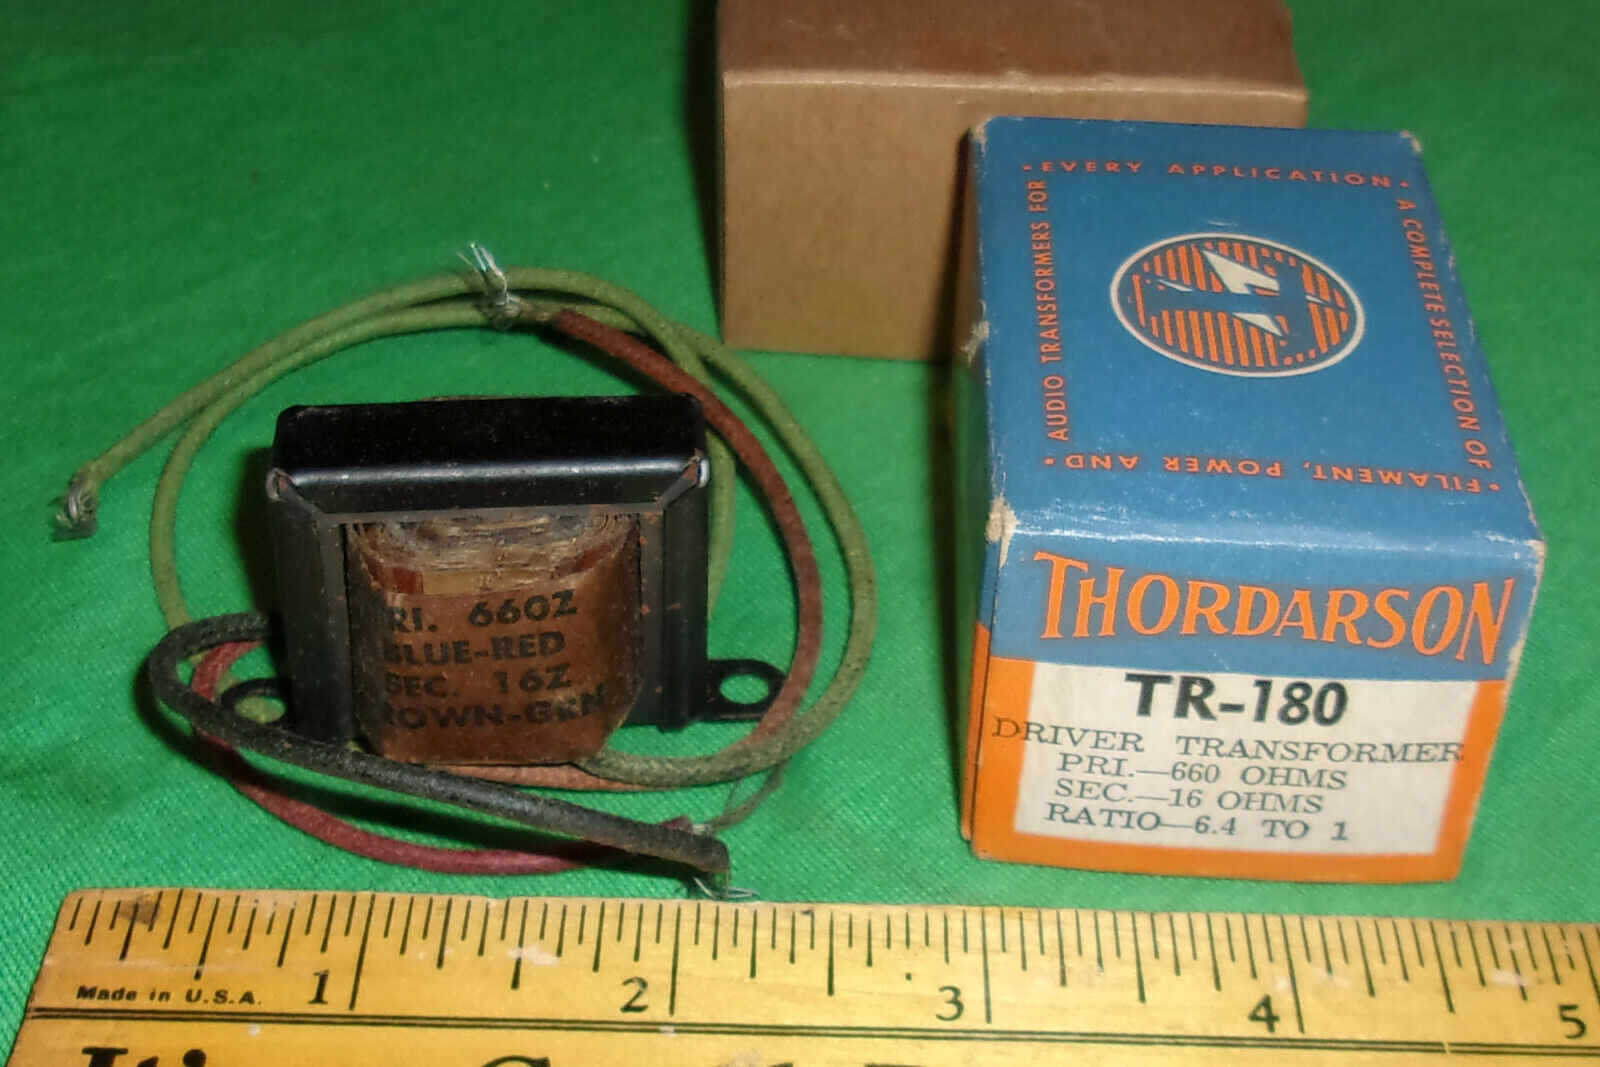 NOS Thordarson Driver Transformer TR-180 (660/16 ohms) 6.4 to 1 Hi Fi Audio